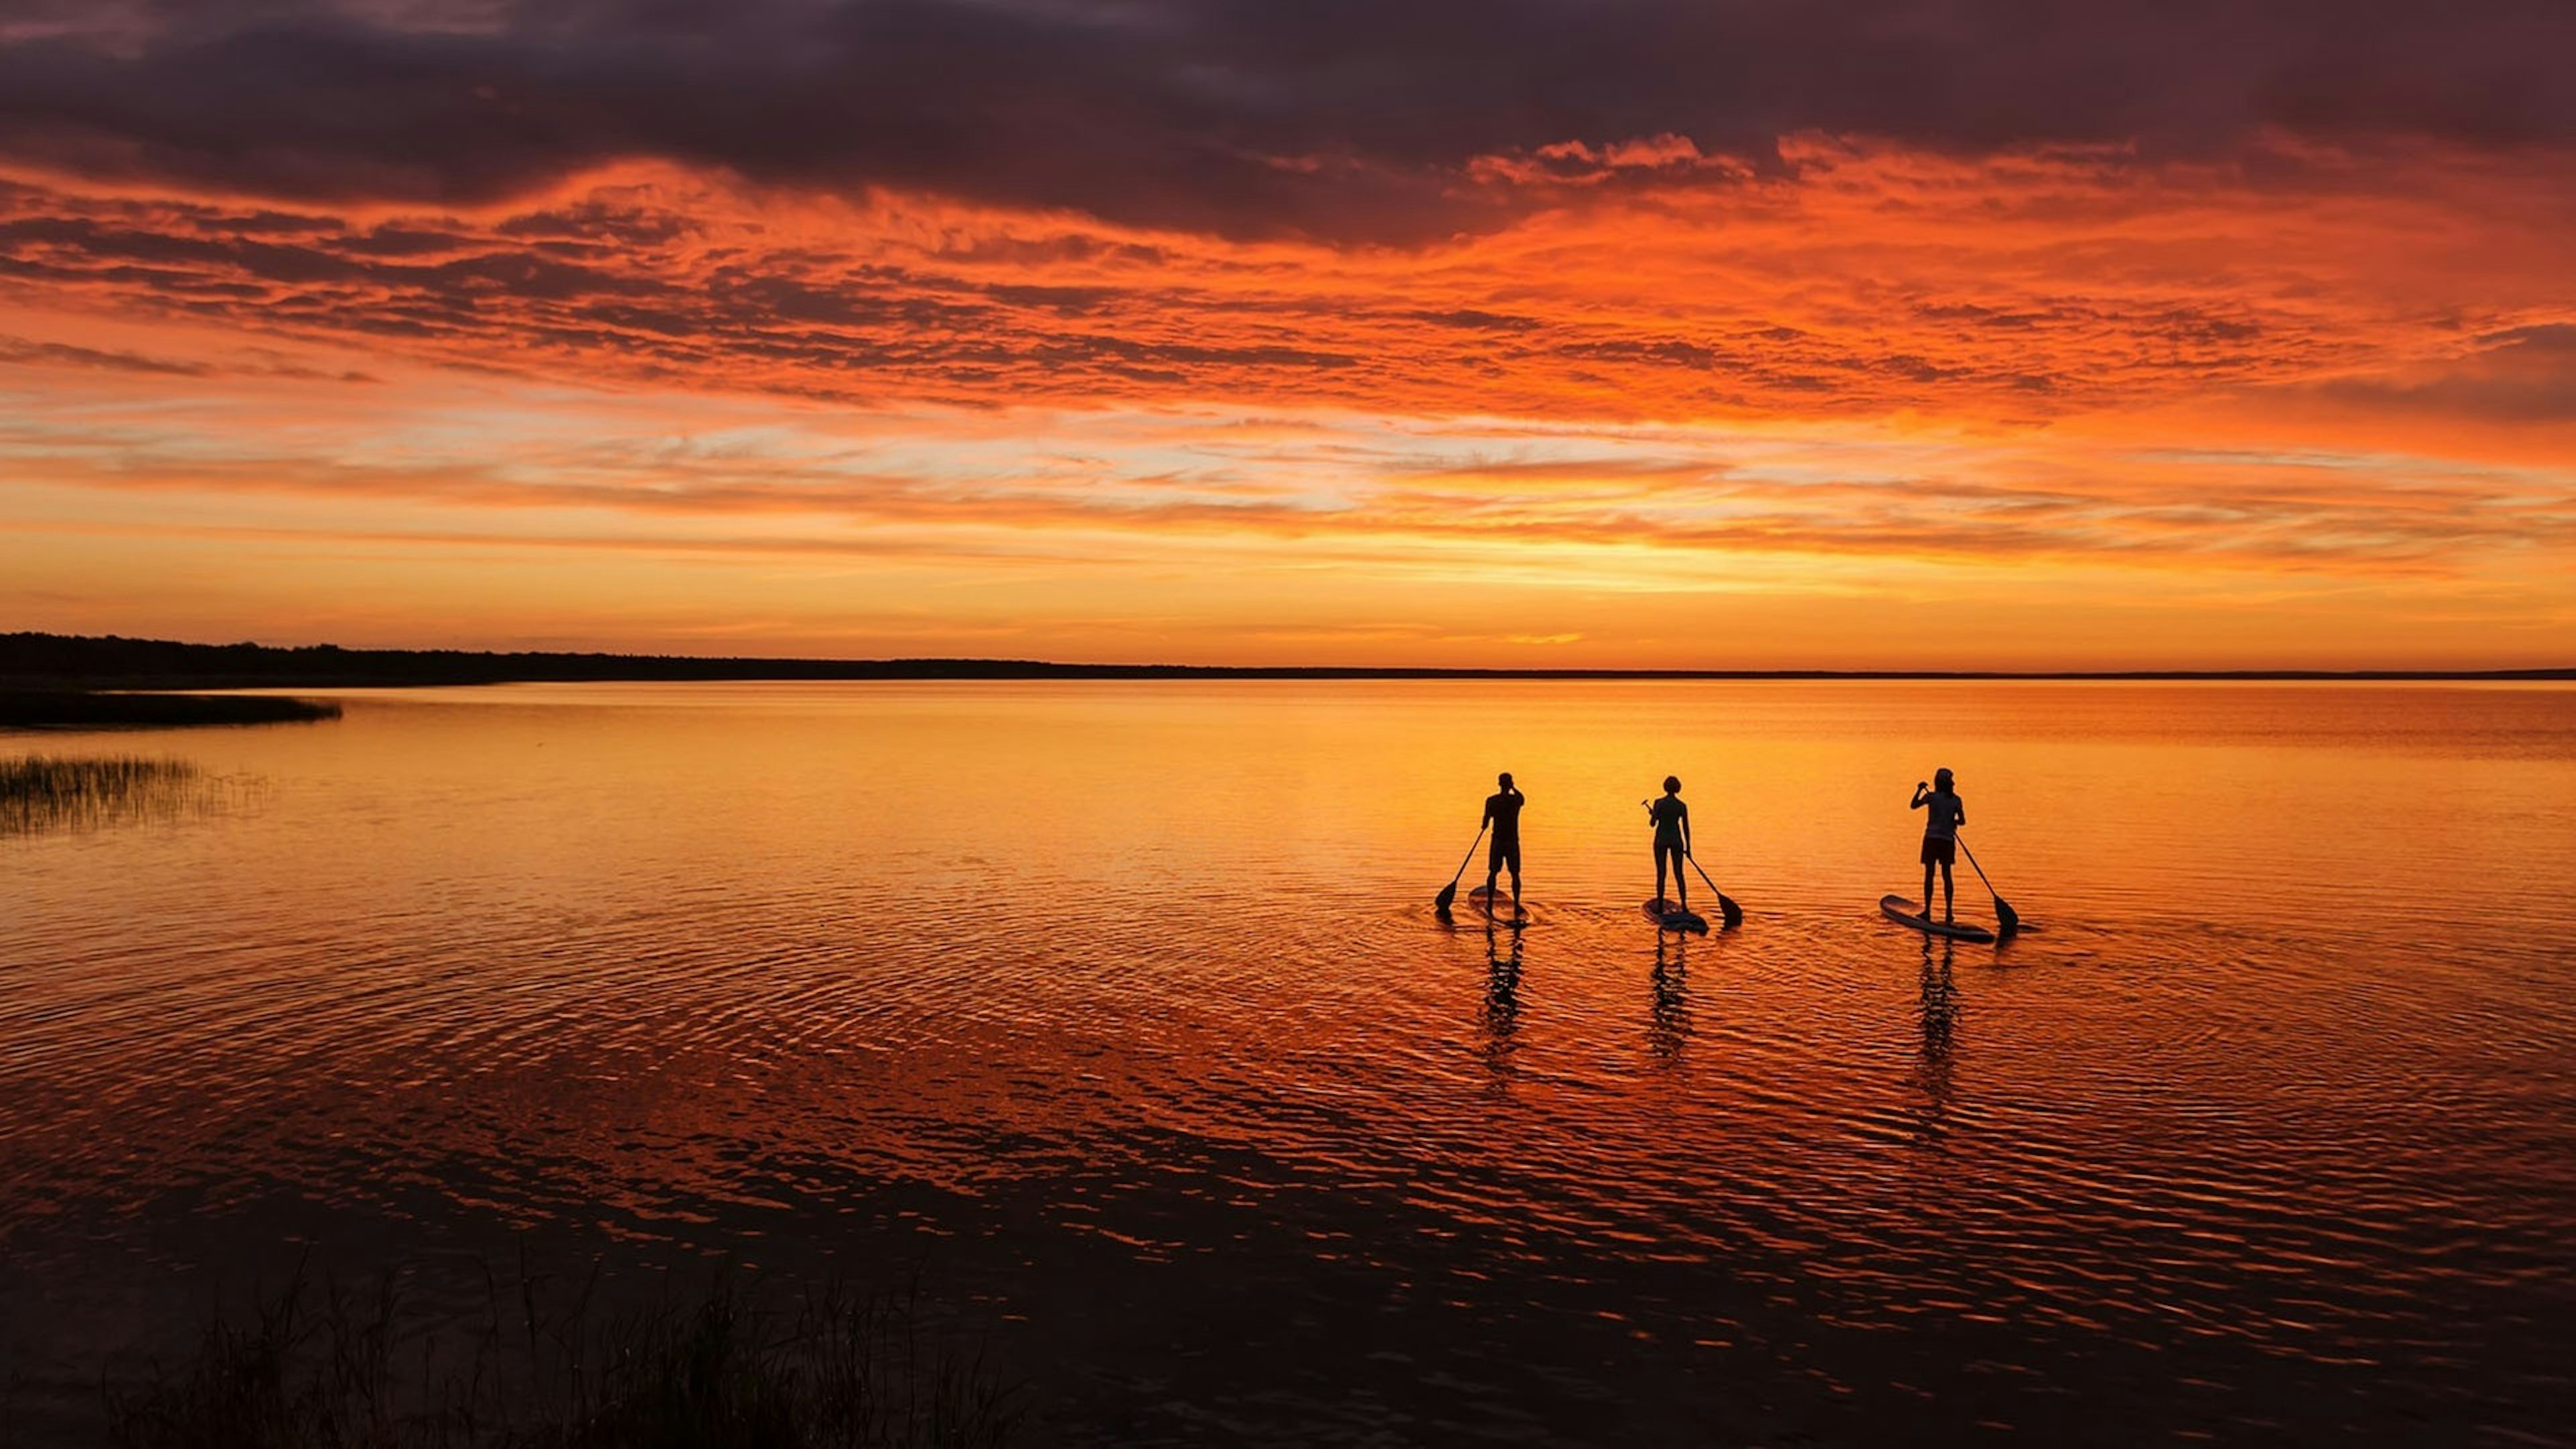 Sup surfing under amazing dark sunset sky with three people